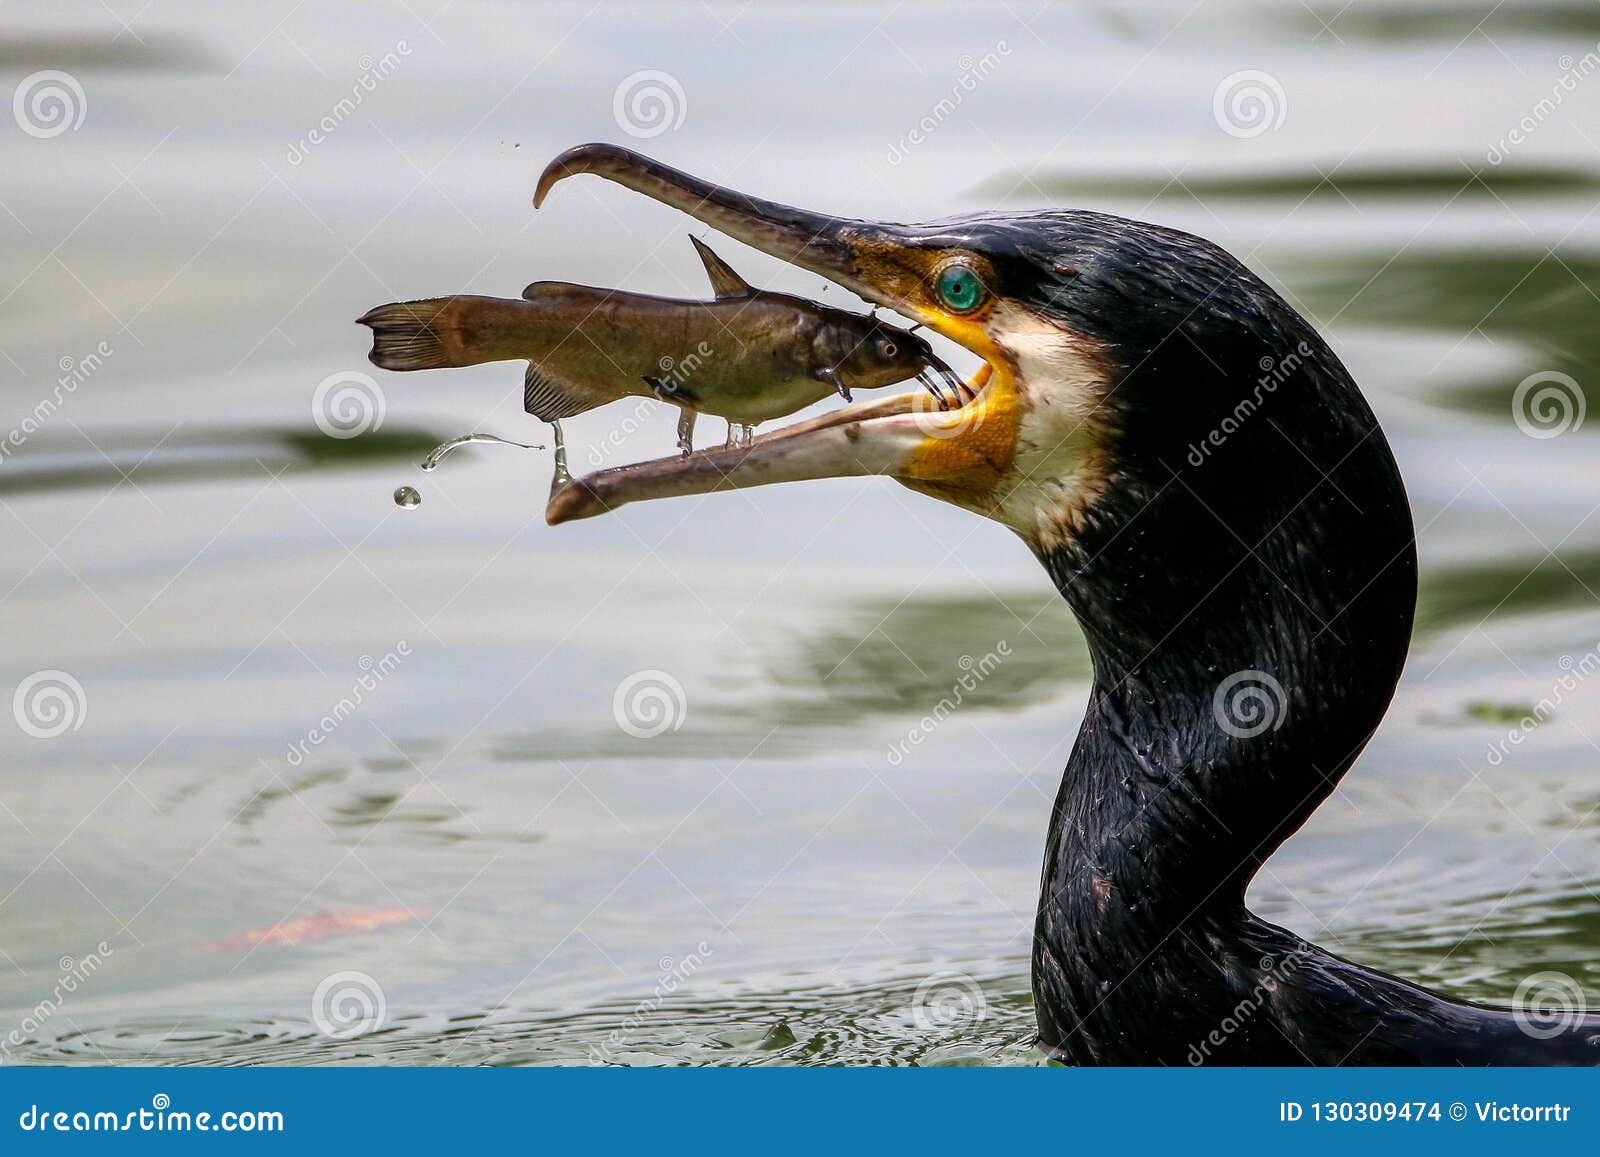 portrait of great cormorant catching fish